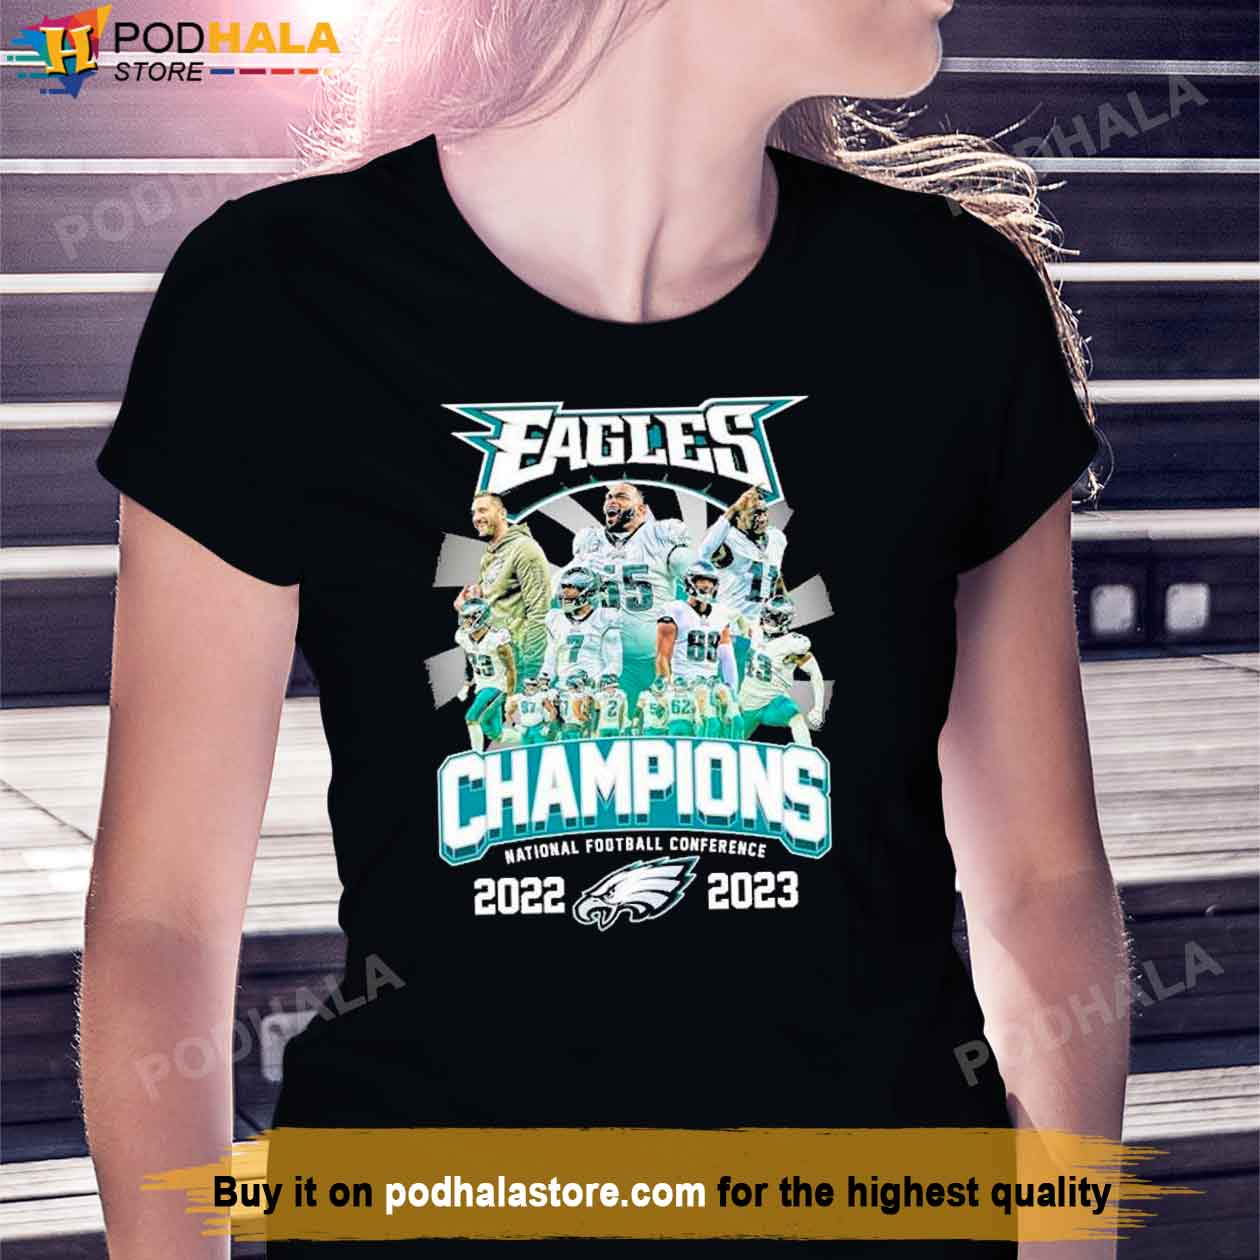 eagles championship shirts 2023